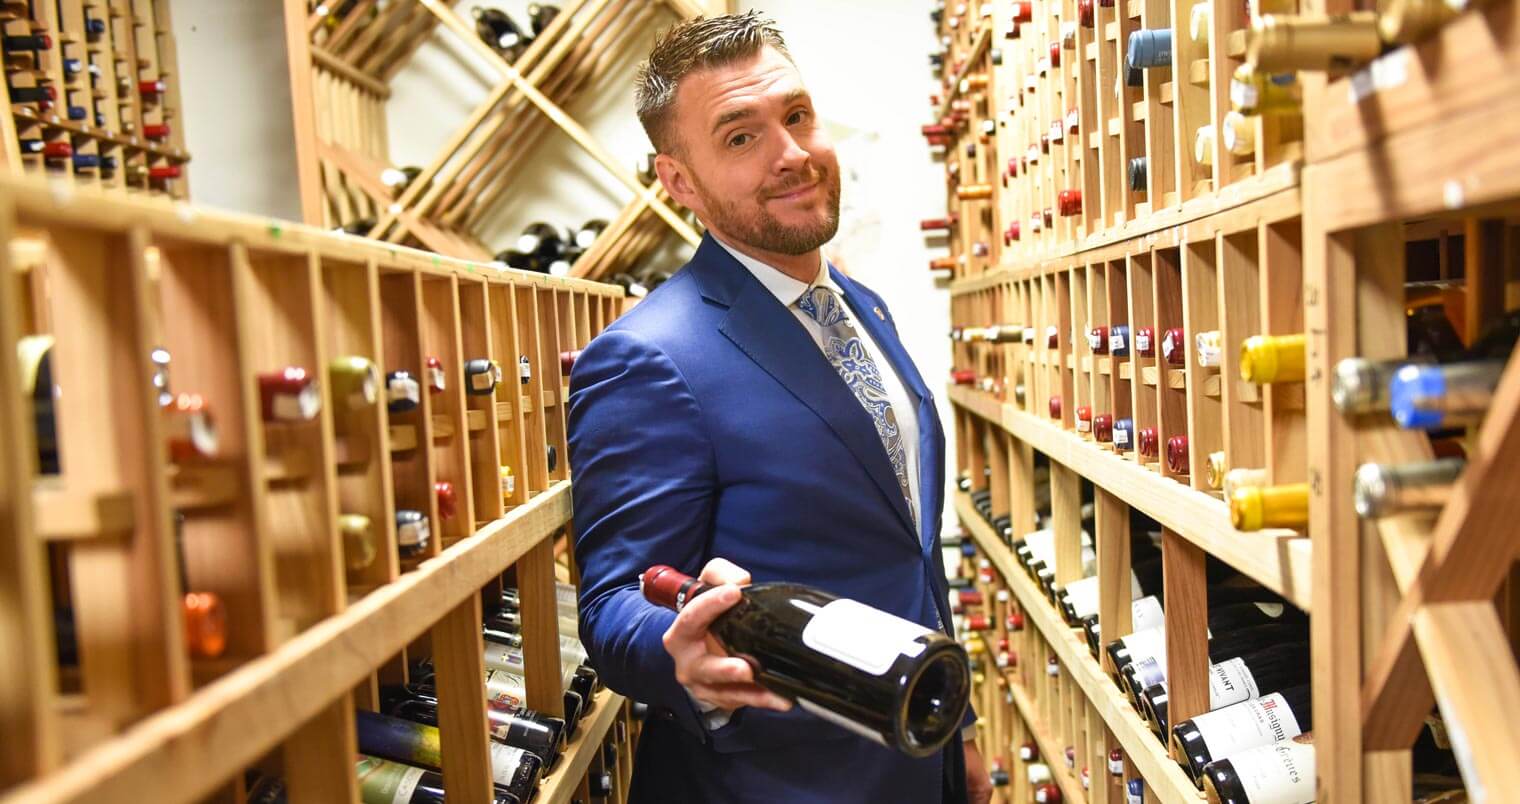 Ryan Baldwin Presenting a Bottle, wine storage room, featured image